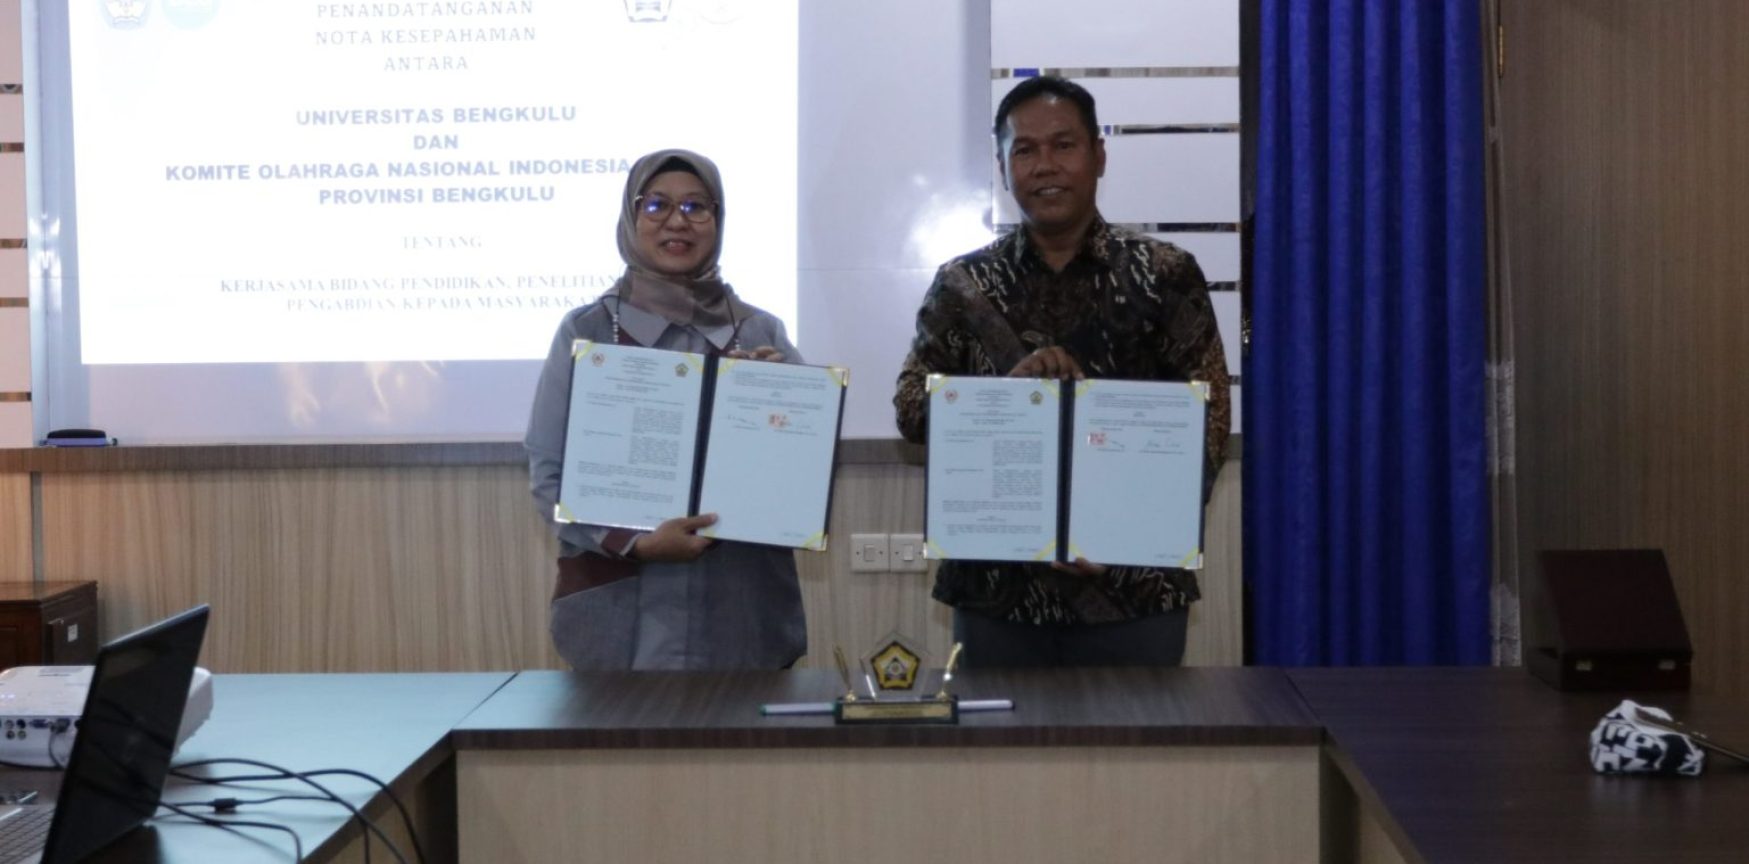 Penandatanganan MoU antara Universitas Bengkulu dengan Komite Olahraga Nasional Indonesia Provinsi Bengkulu